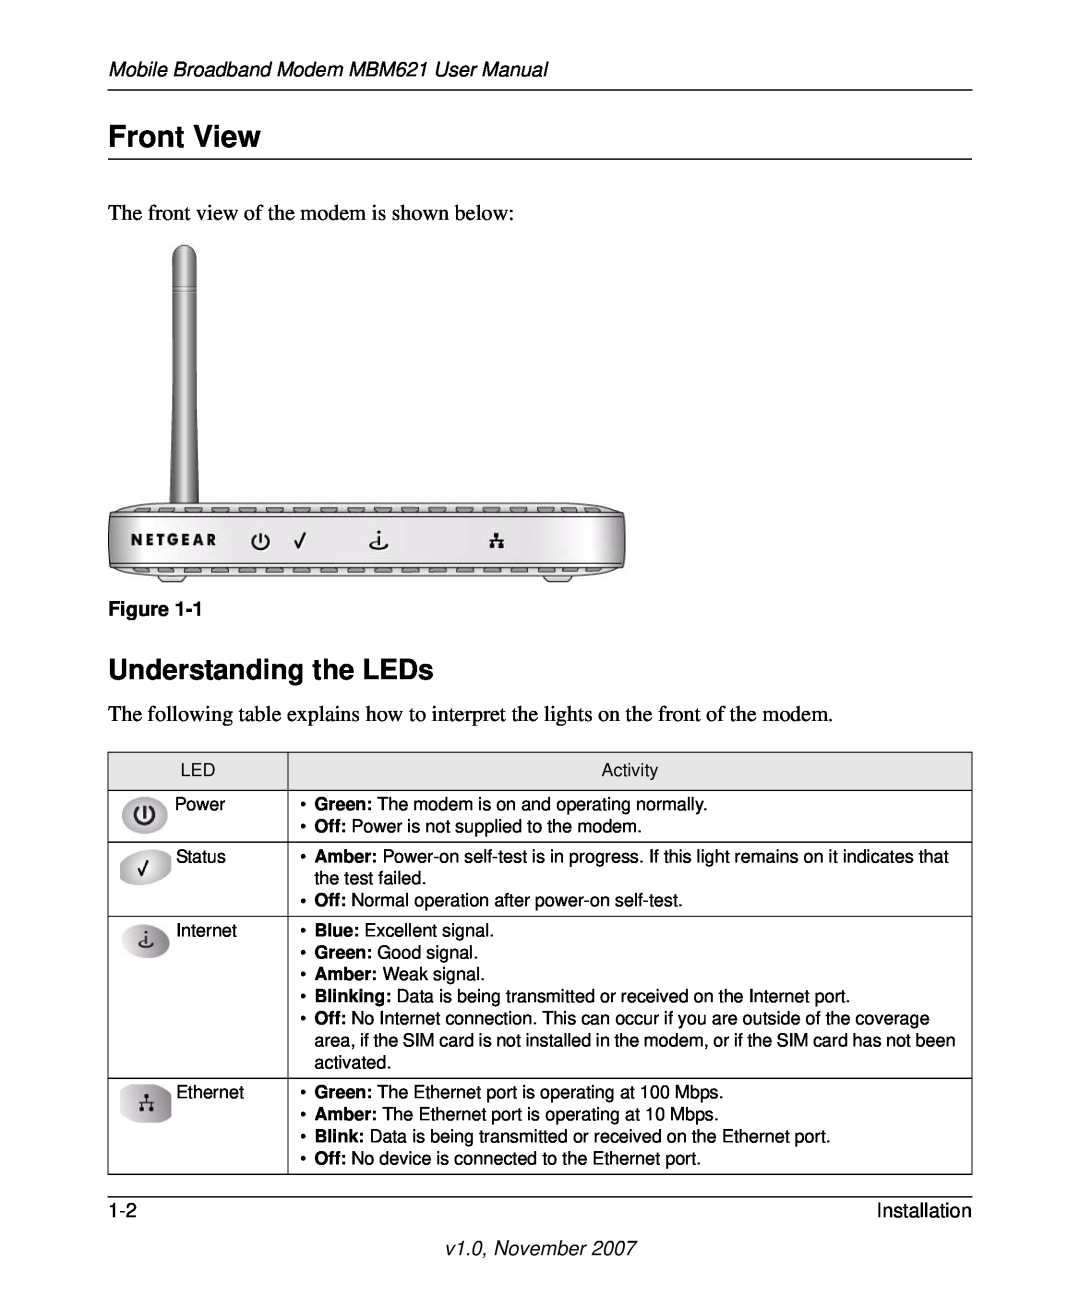 NETGEAR Front View, Understanding the LEDs, Mobile Broadband Modem MBM621 User Manual, Installation, v1.0, November 